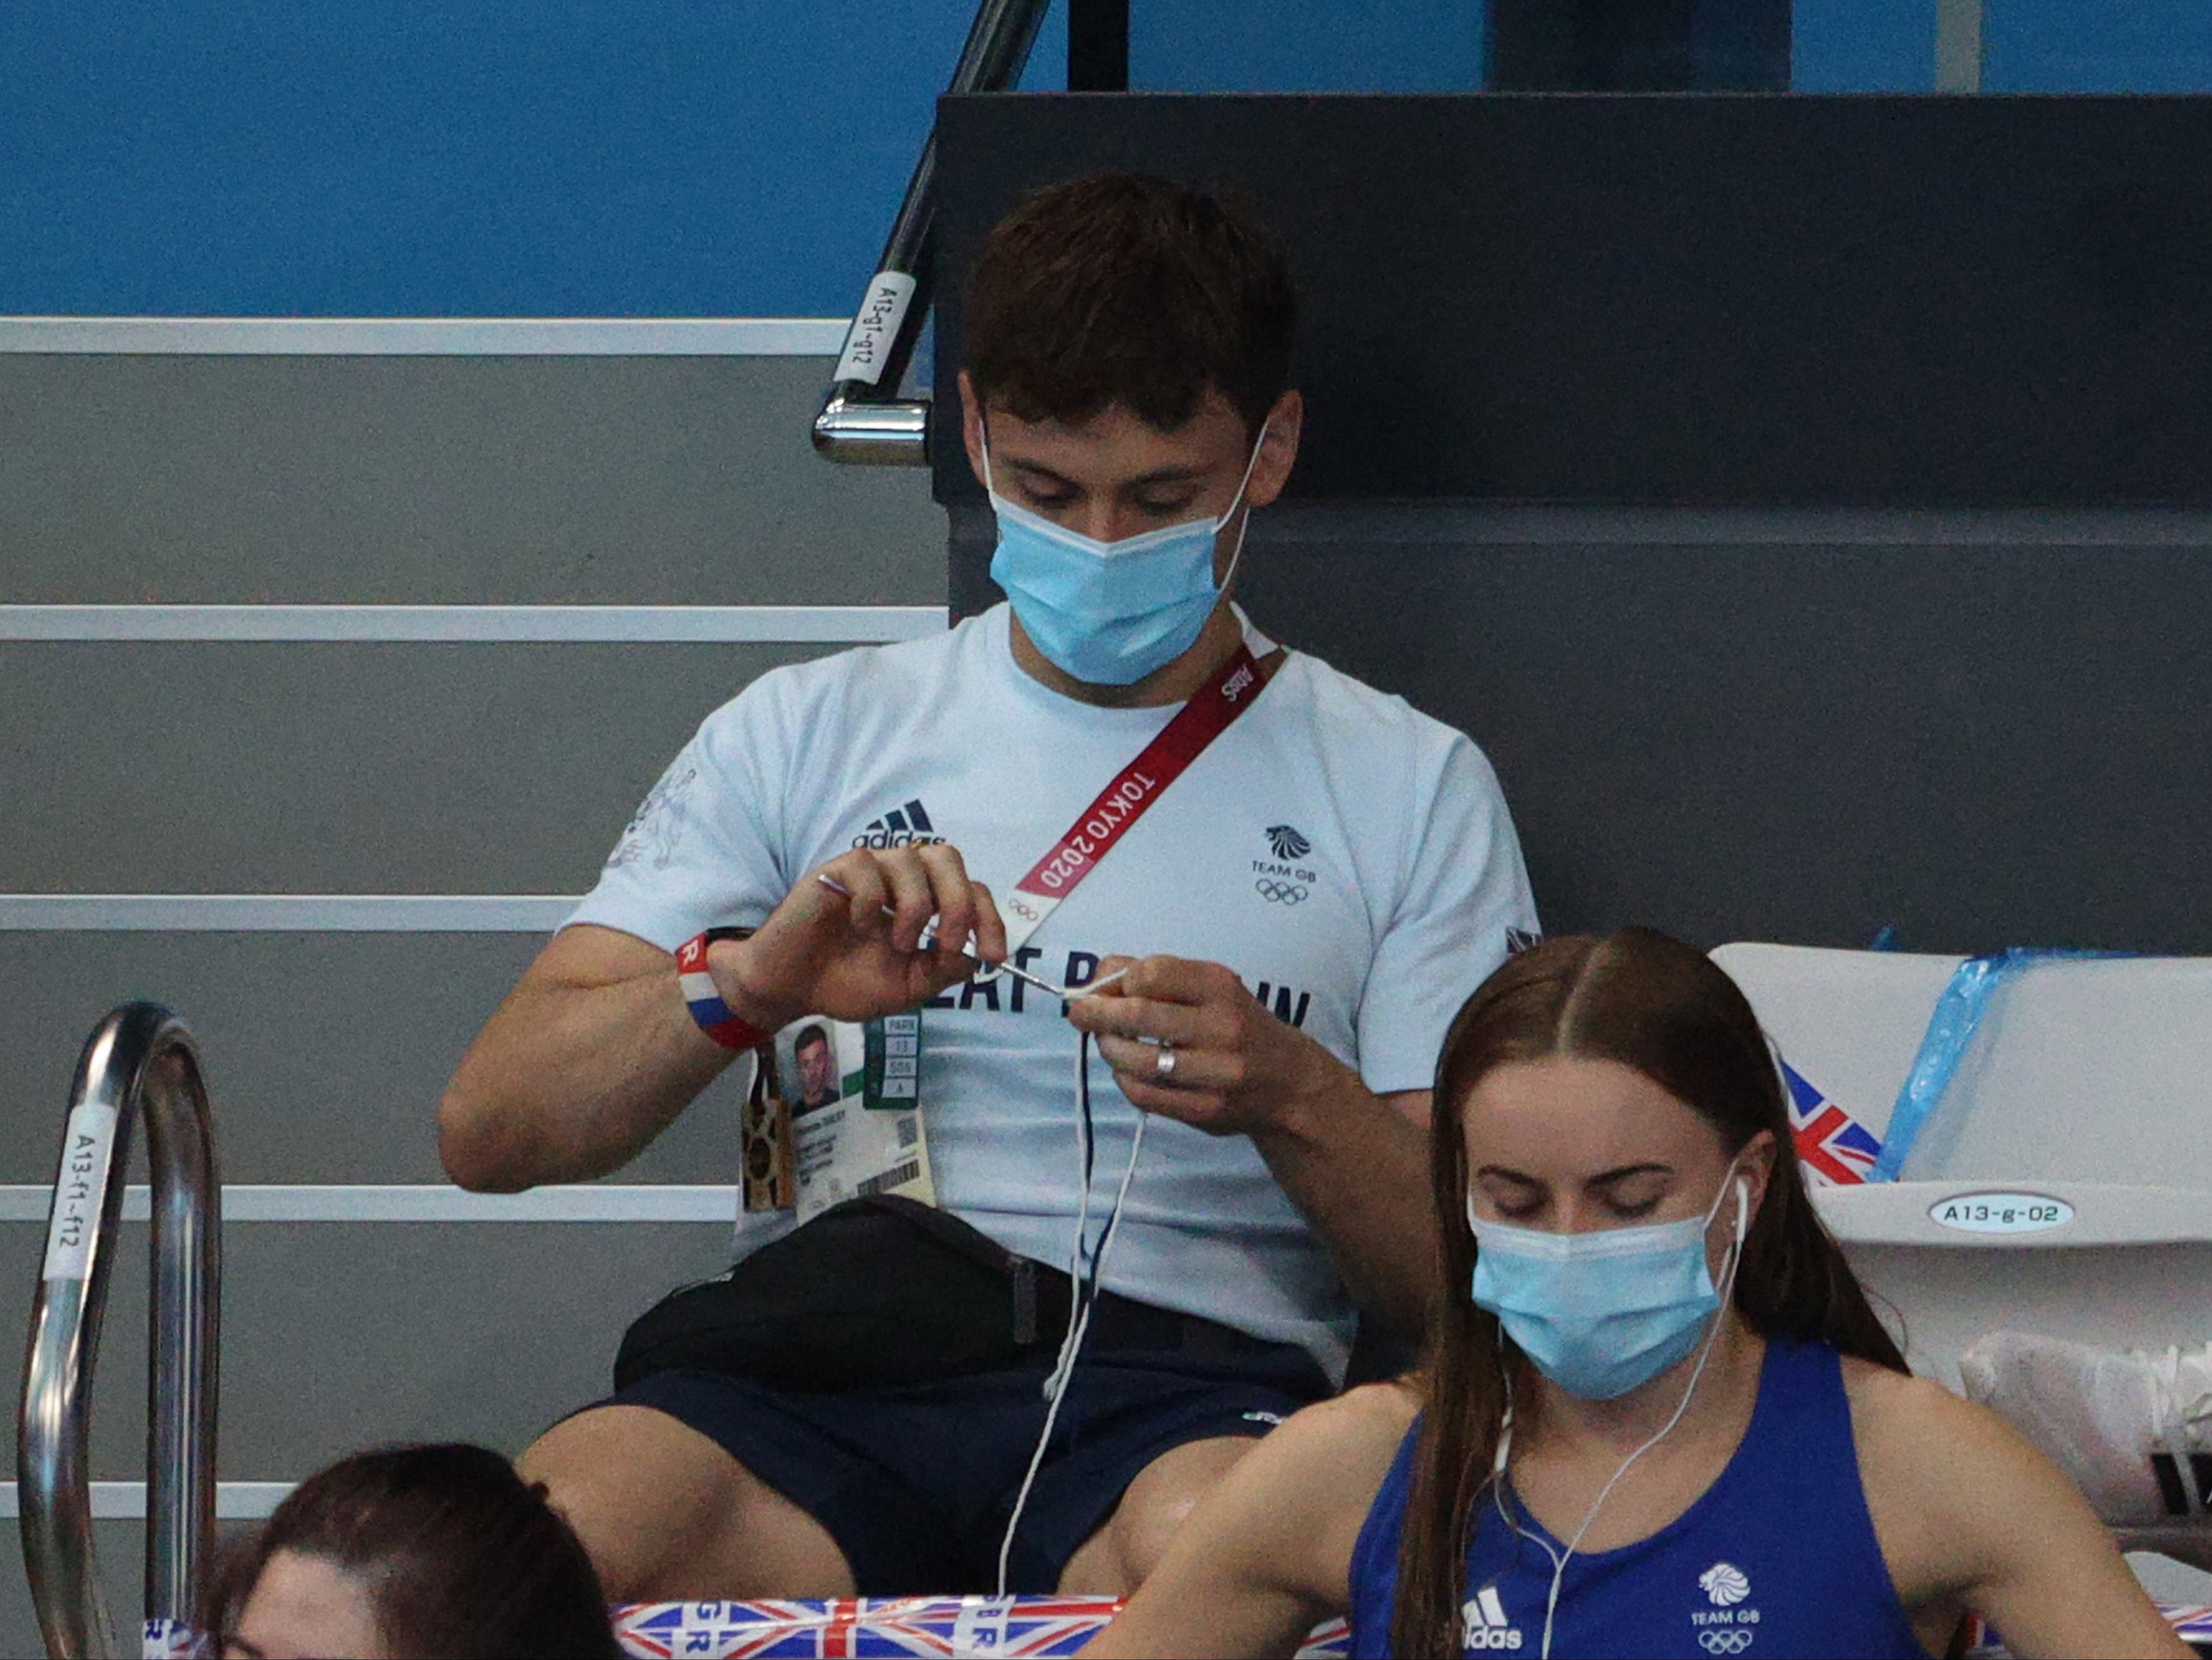 Tom Daley knits at the Tokyo Olympics